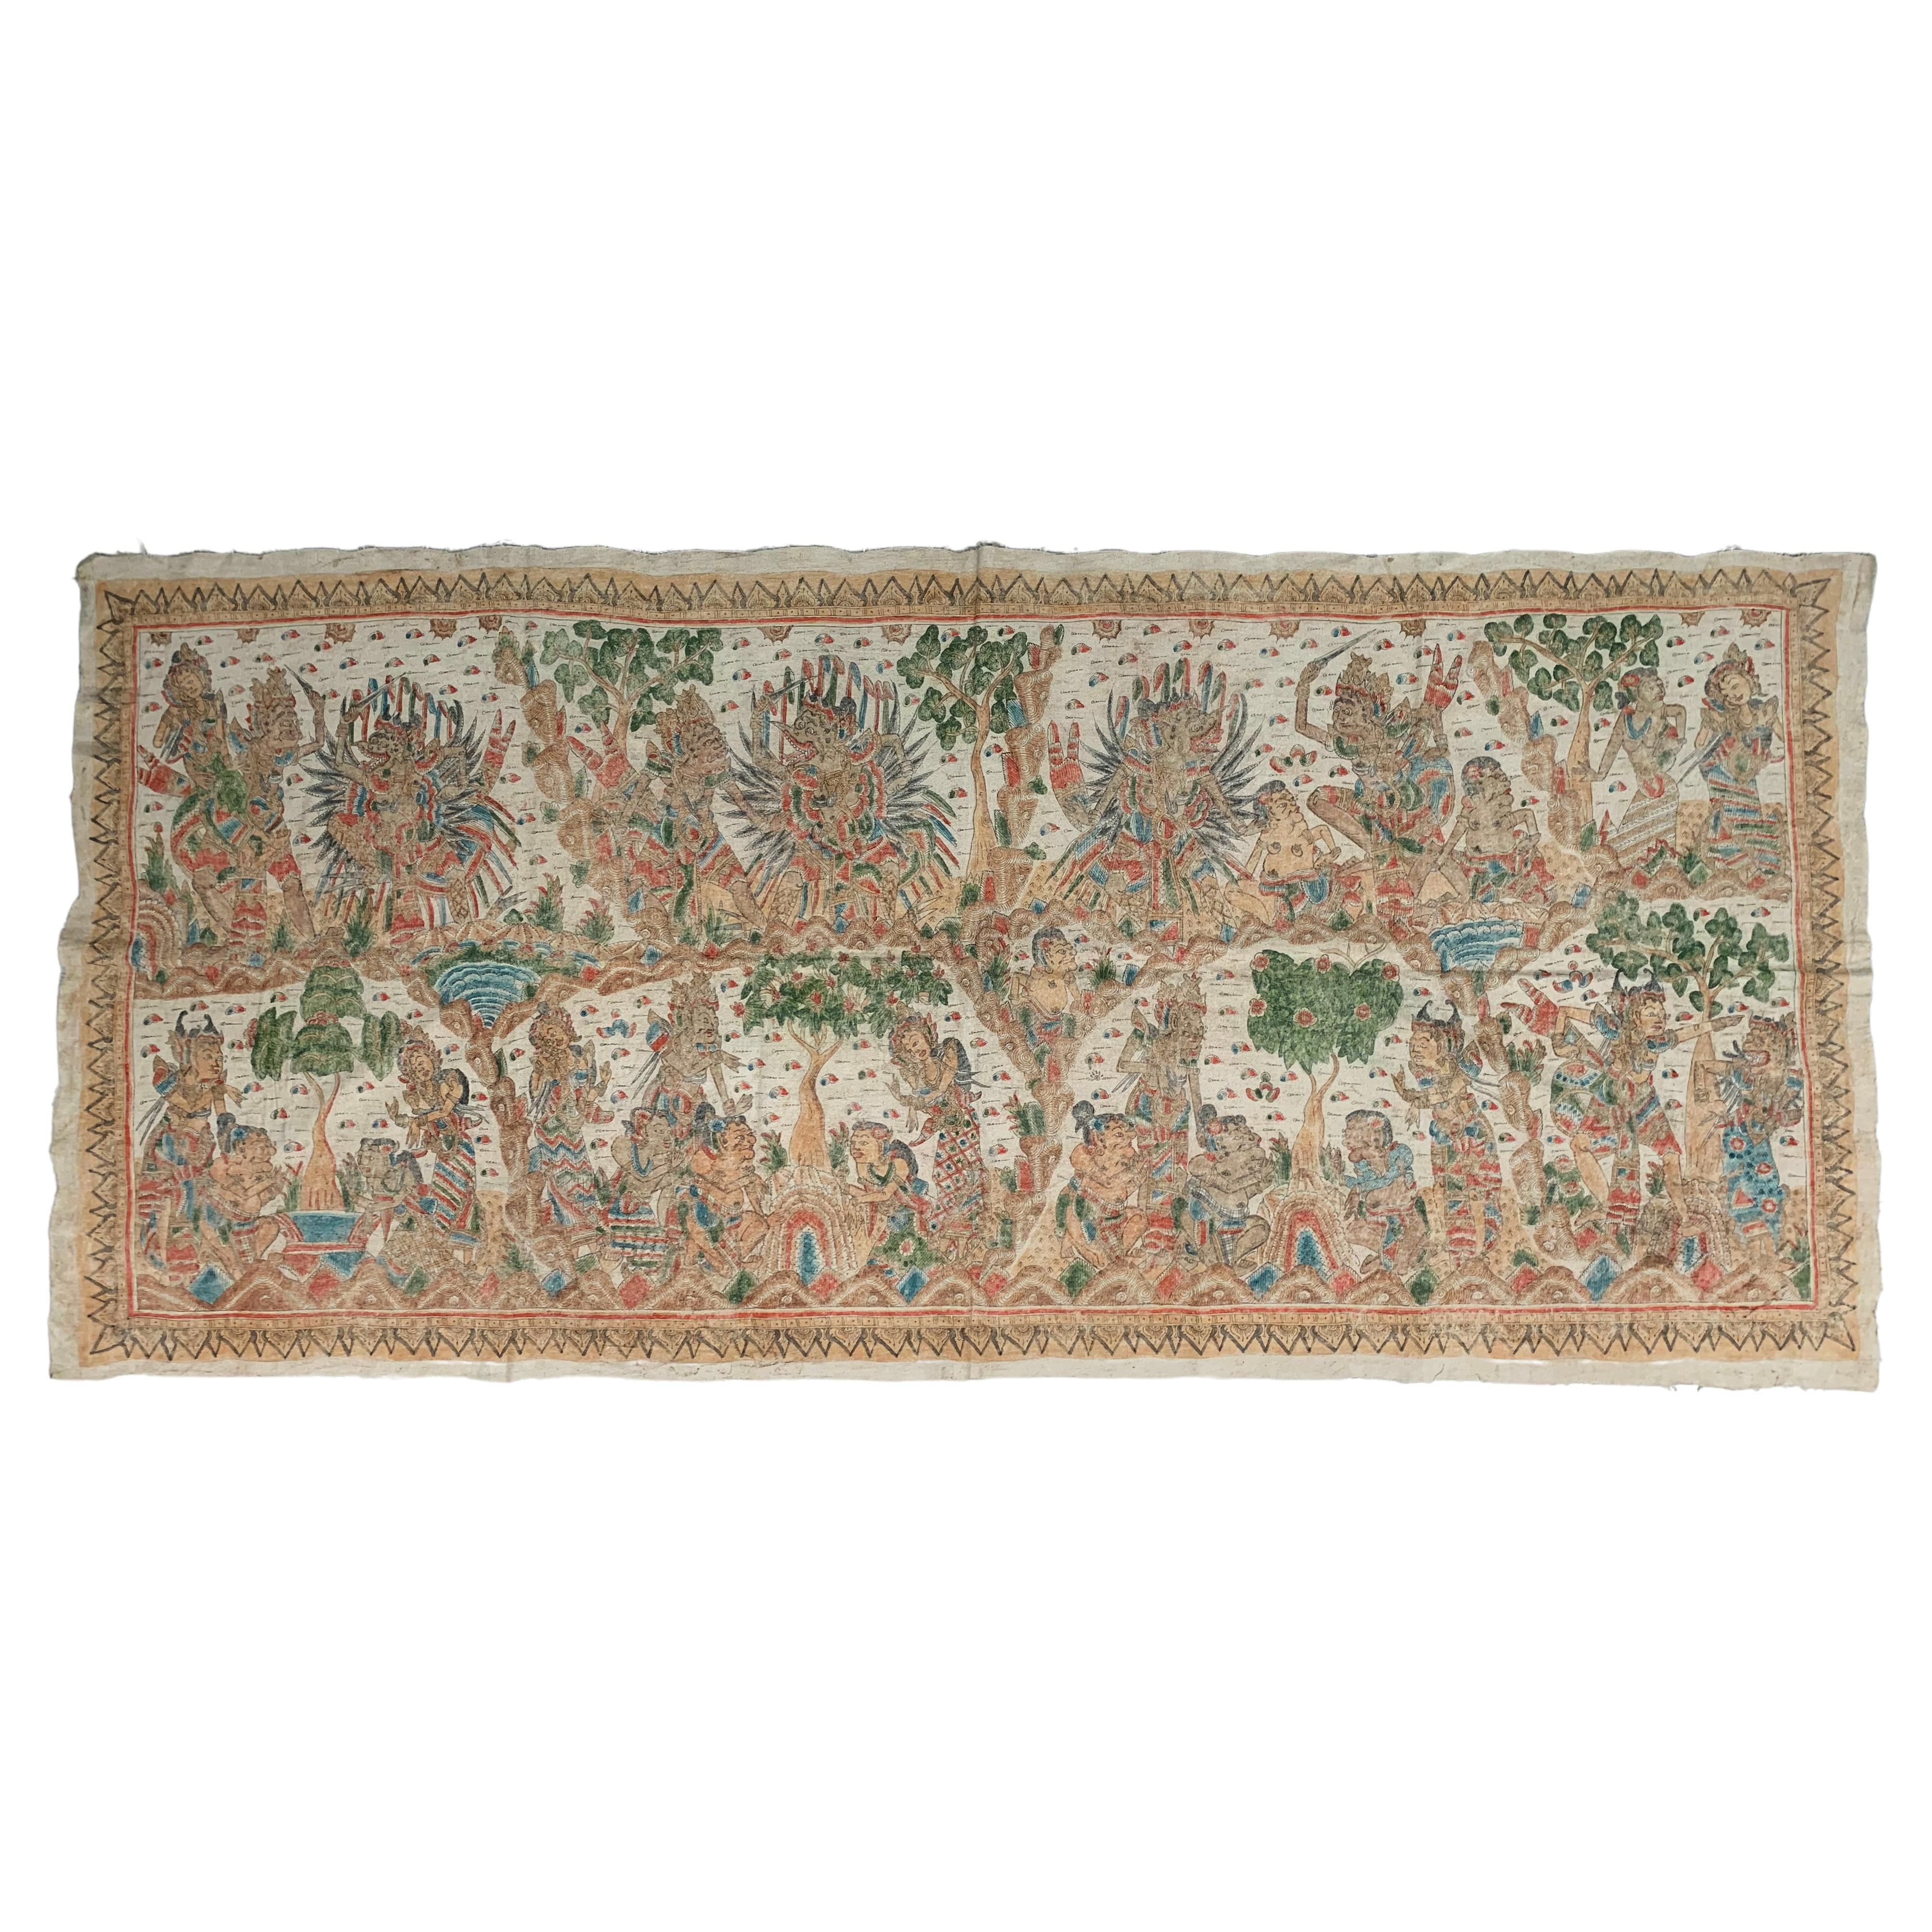 Hindu-Textil-Gemälde „Kamasan“ von Bali, Indonesien, frühes 20. Jahrhundert